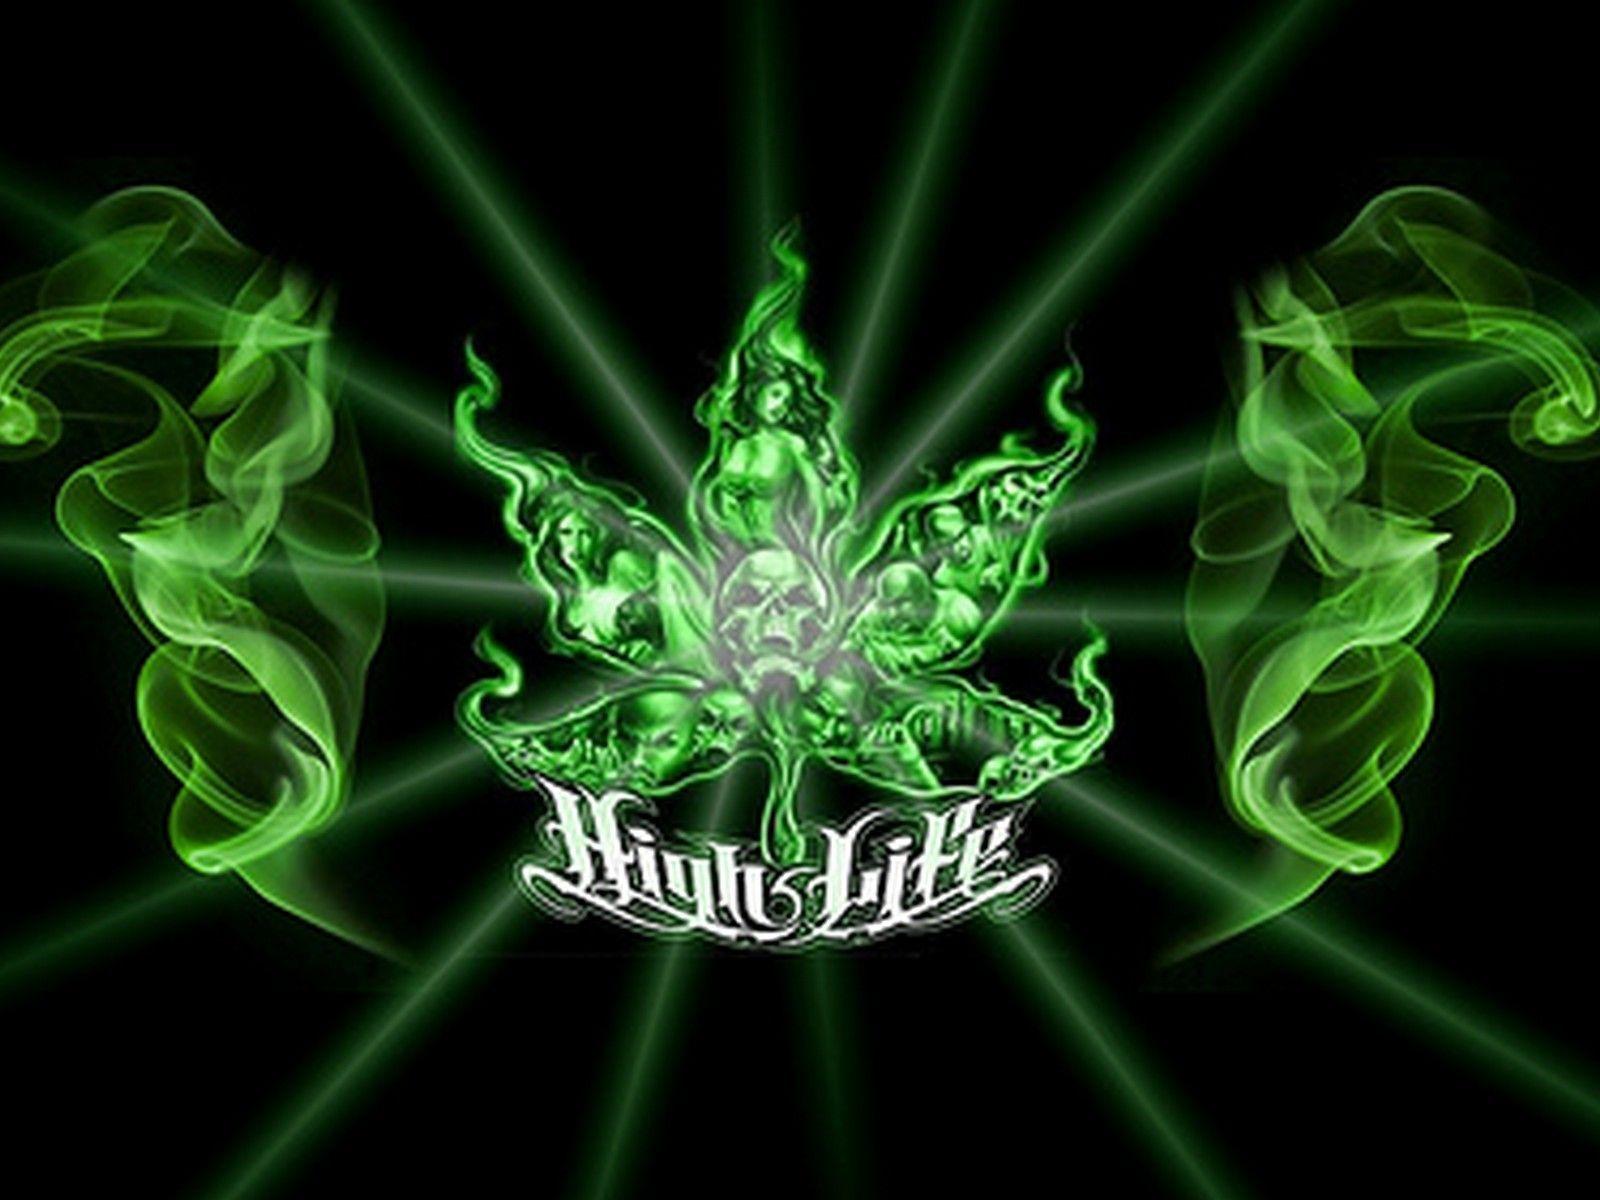 Download Supreme Logo With Weed Leaf Background Wallpaper